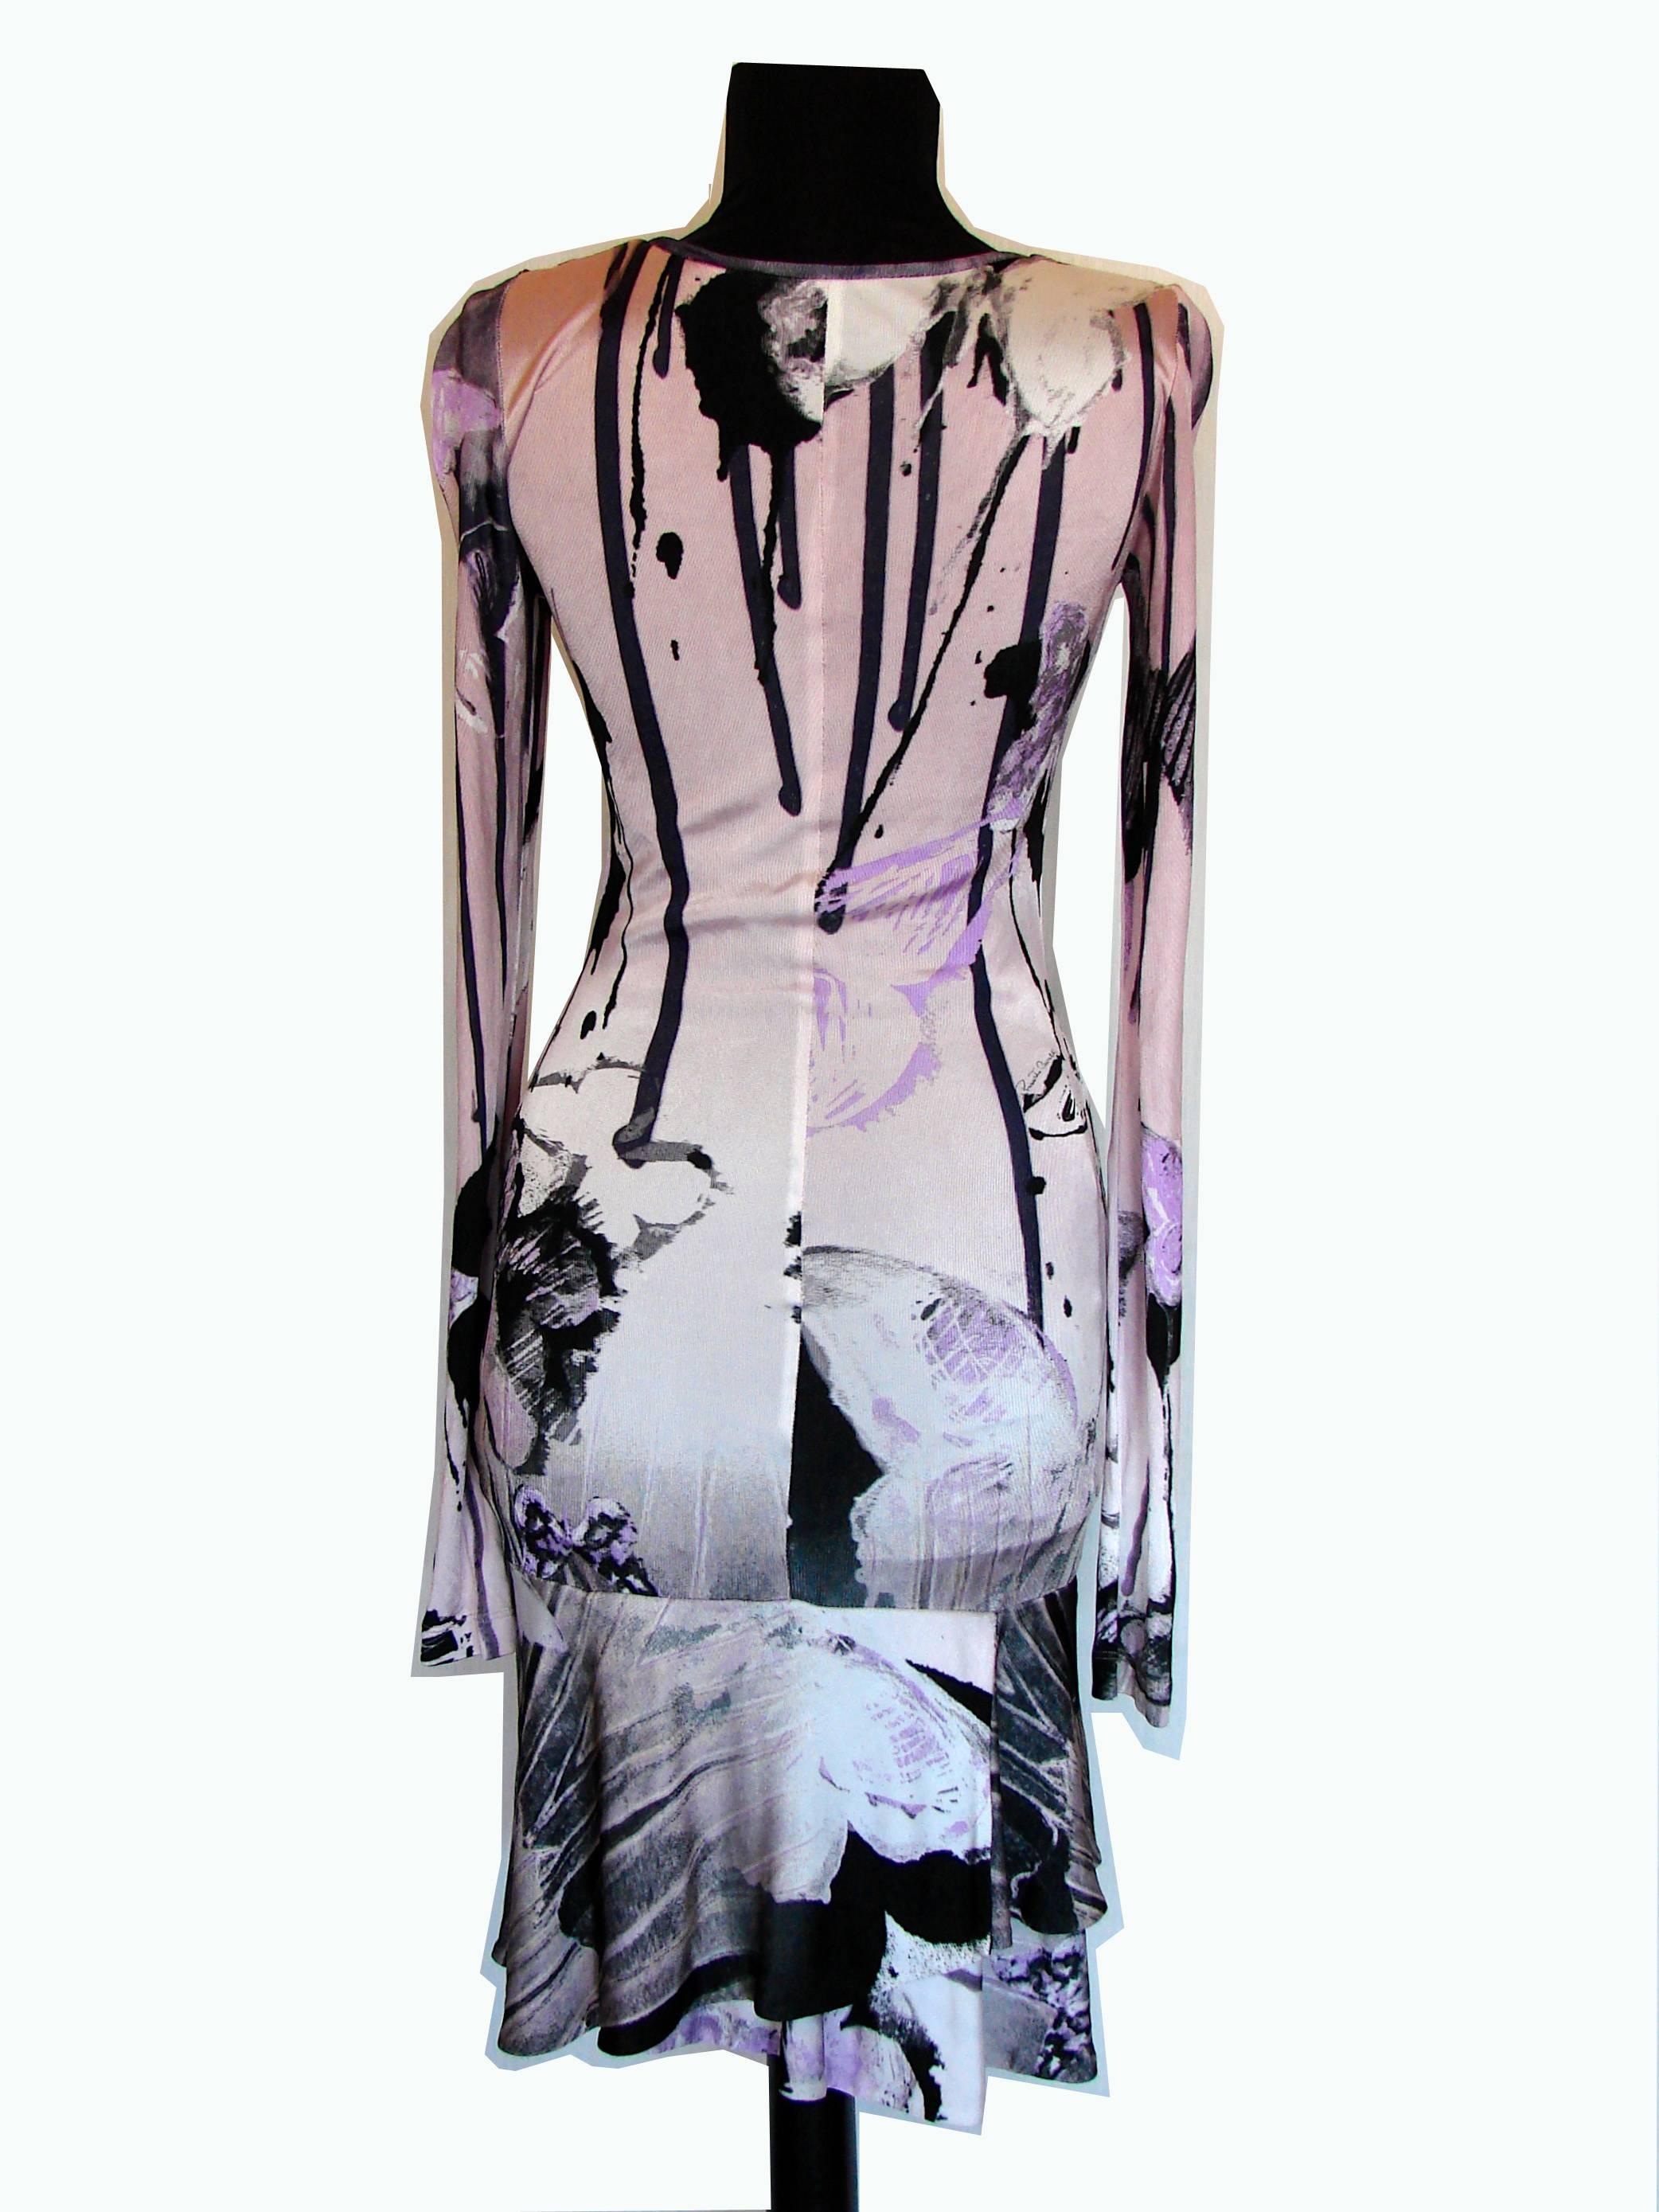 Roberto Cavalli Vibrant Butterfly Print Dress Bodycon Tiered Hem Size 36 1